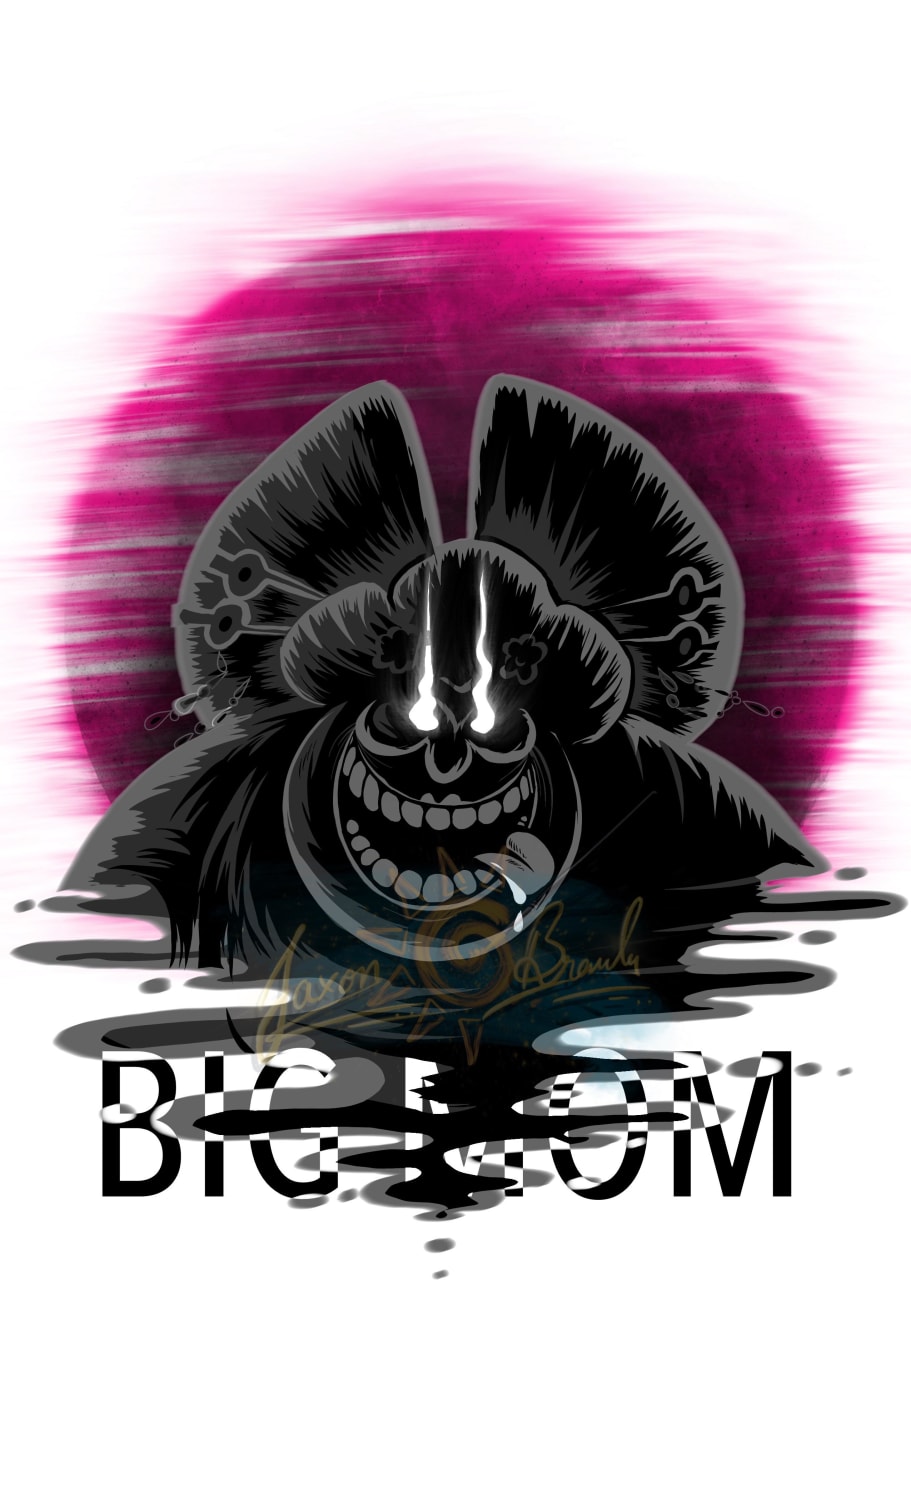 My design for BIGGU MAMMU! My favorite yonko! The freak, the demon, the god of destruction, the mad woman. The walking nuke! Hope you like it!